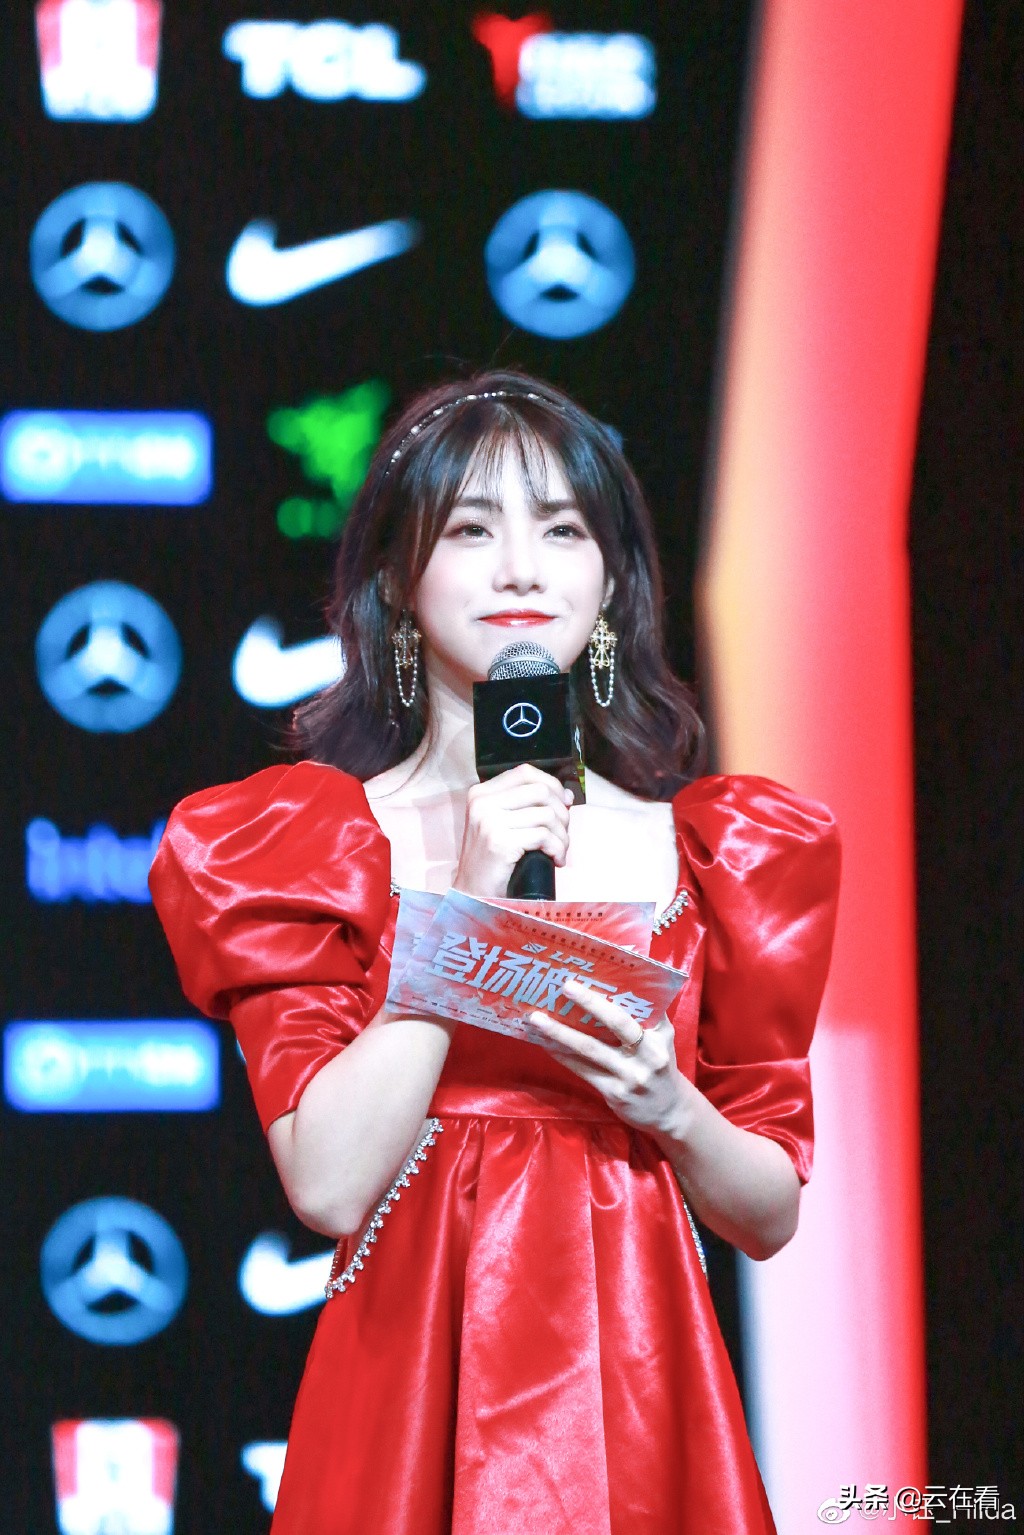 Enjoy the cute photos of League of Legends beauty host Xiaoyu - iMedia